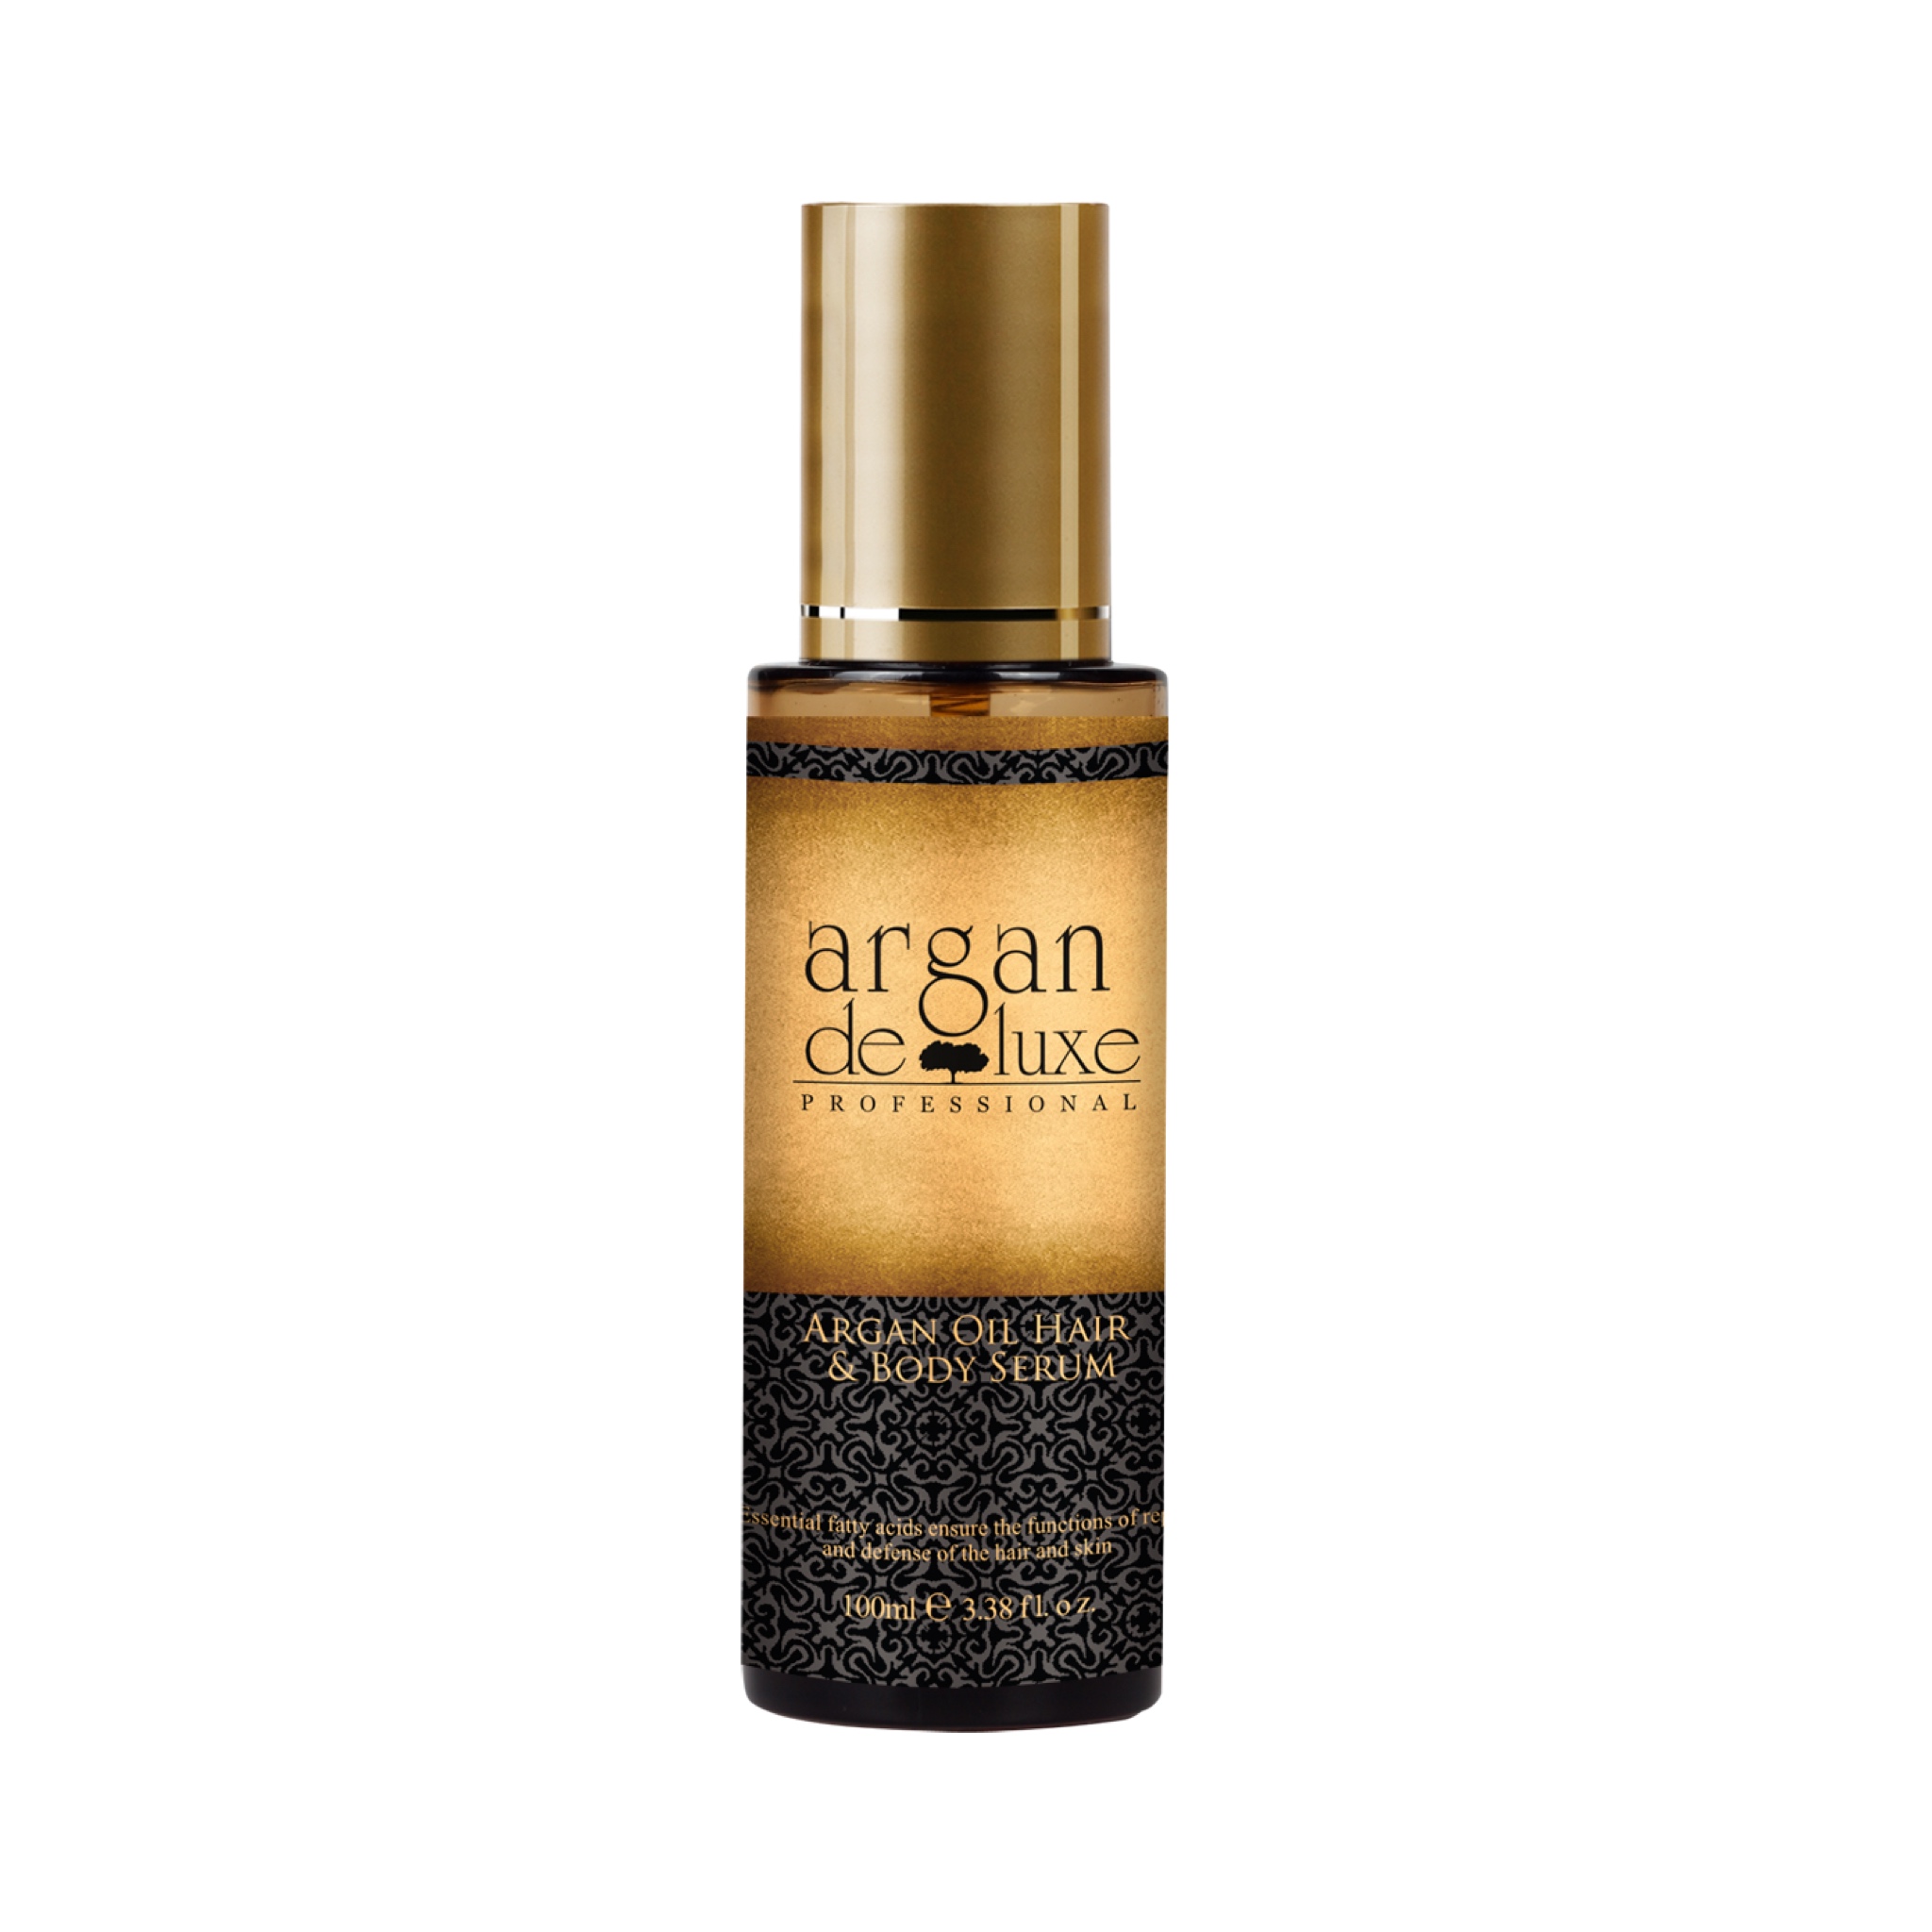 Argan Oil Hair & Body Serum